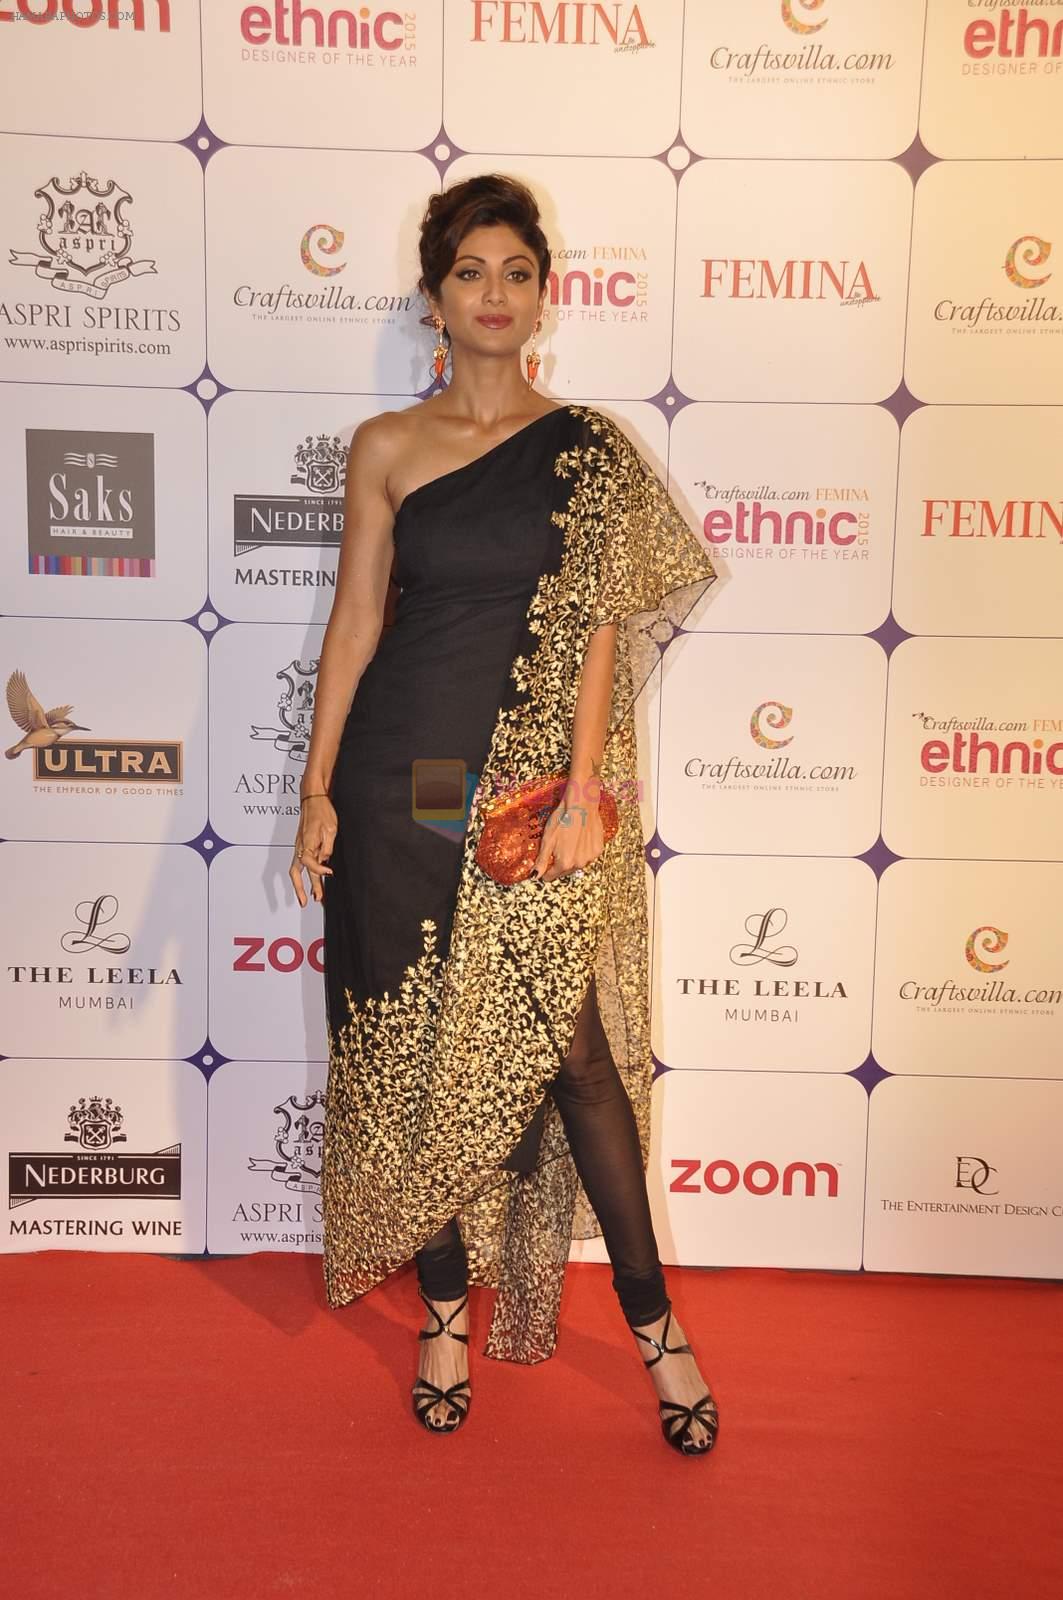 Shilpa Shetty at Femina ethnic red carpet on 8th Oct 2015